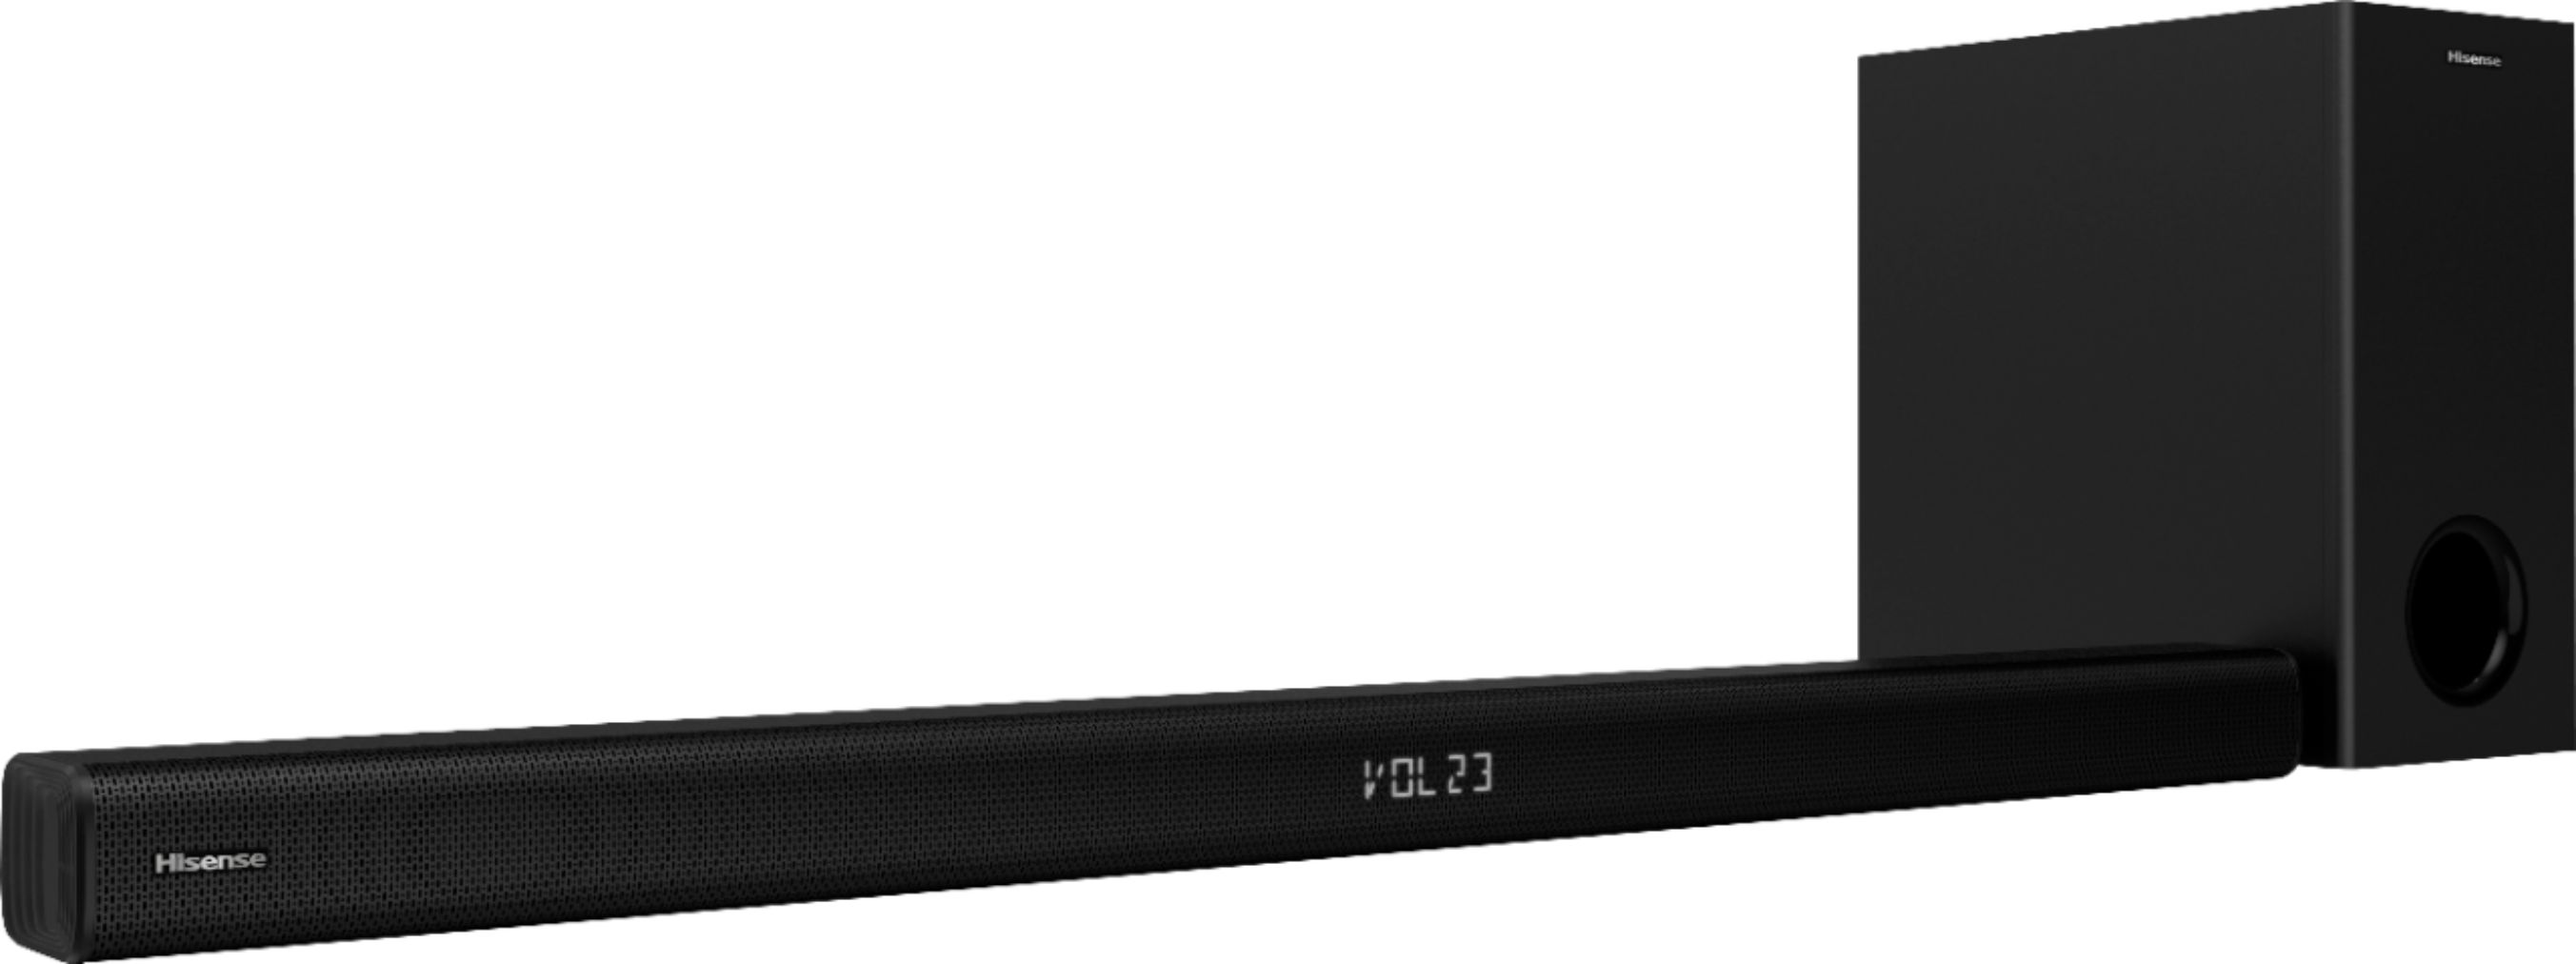 Hisense Wireless Soundbar Best Subwoofer with Black Buy: 2.1-Channel HS218